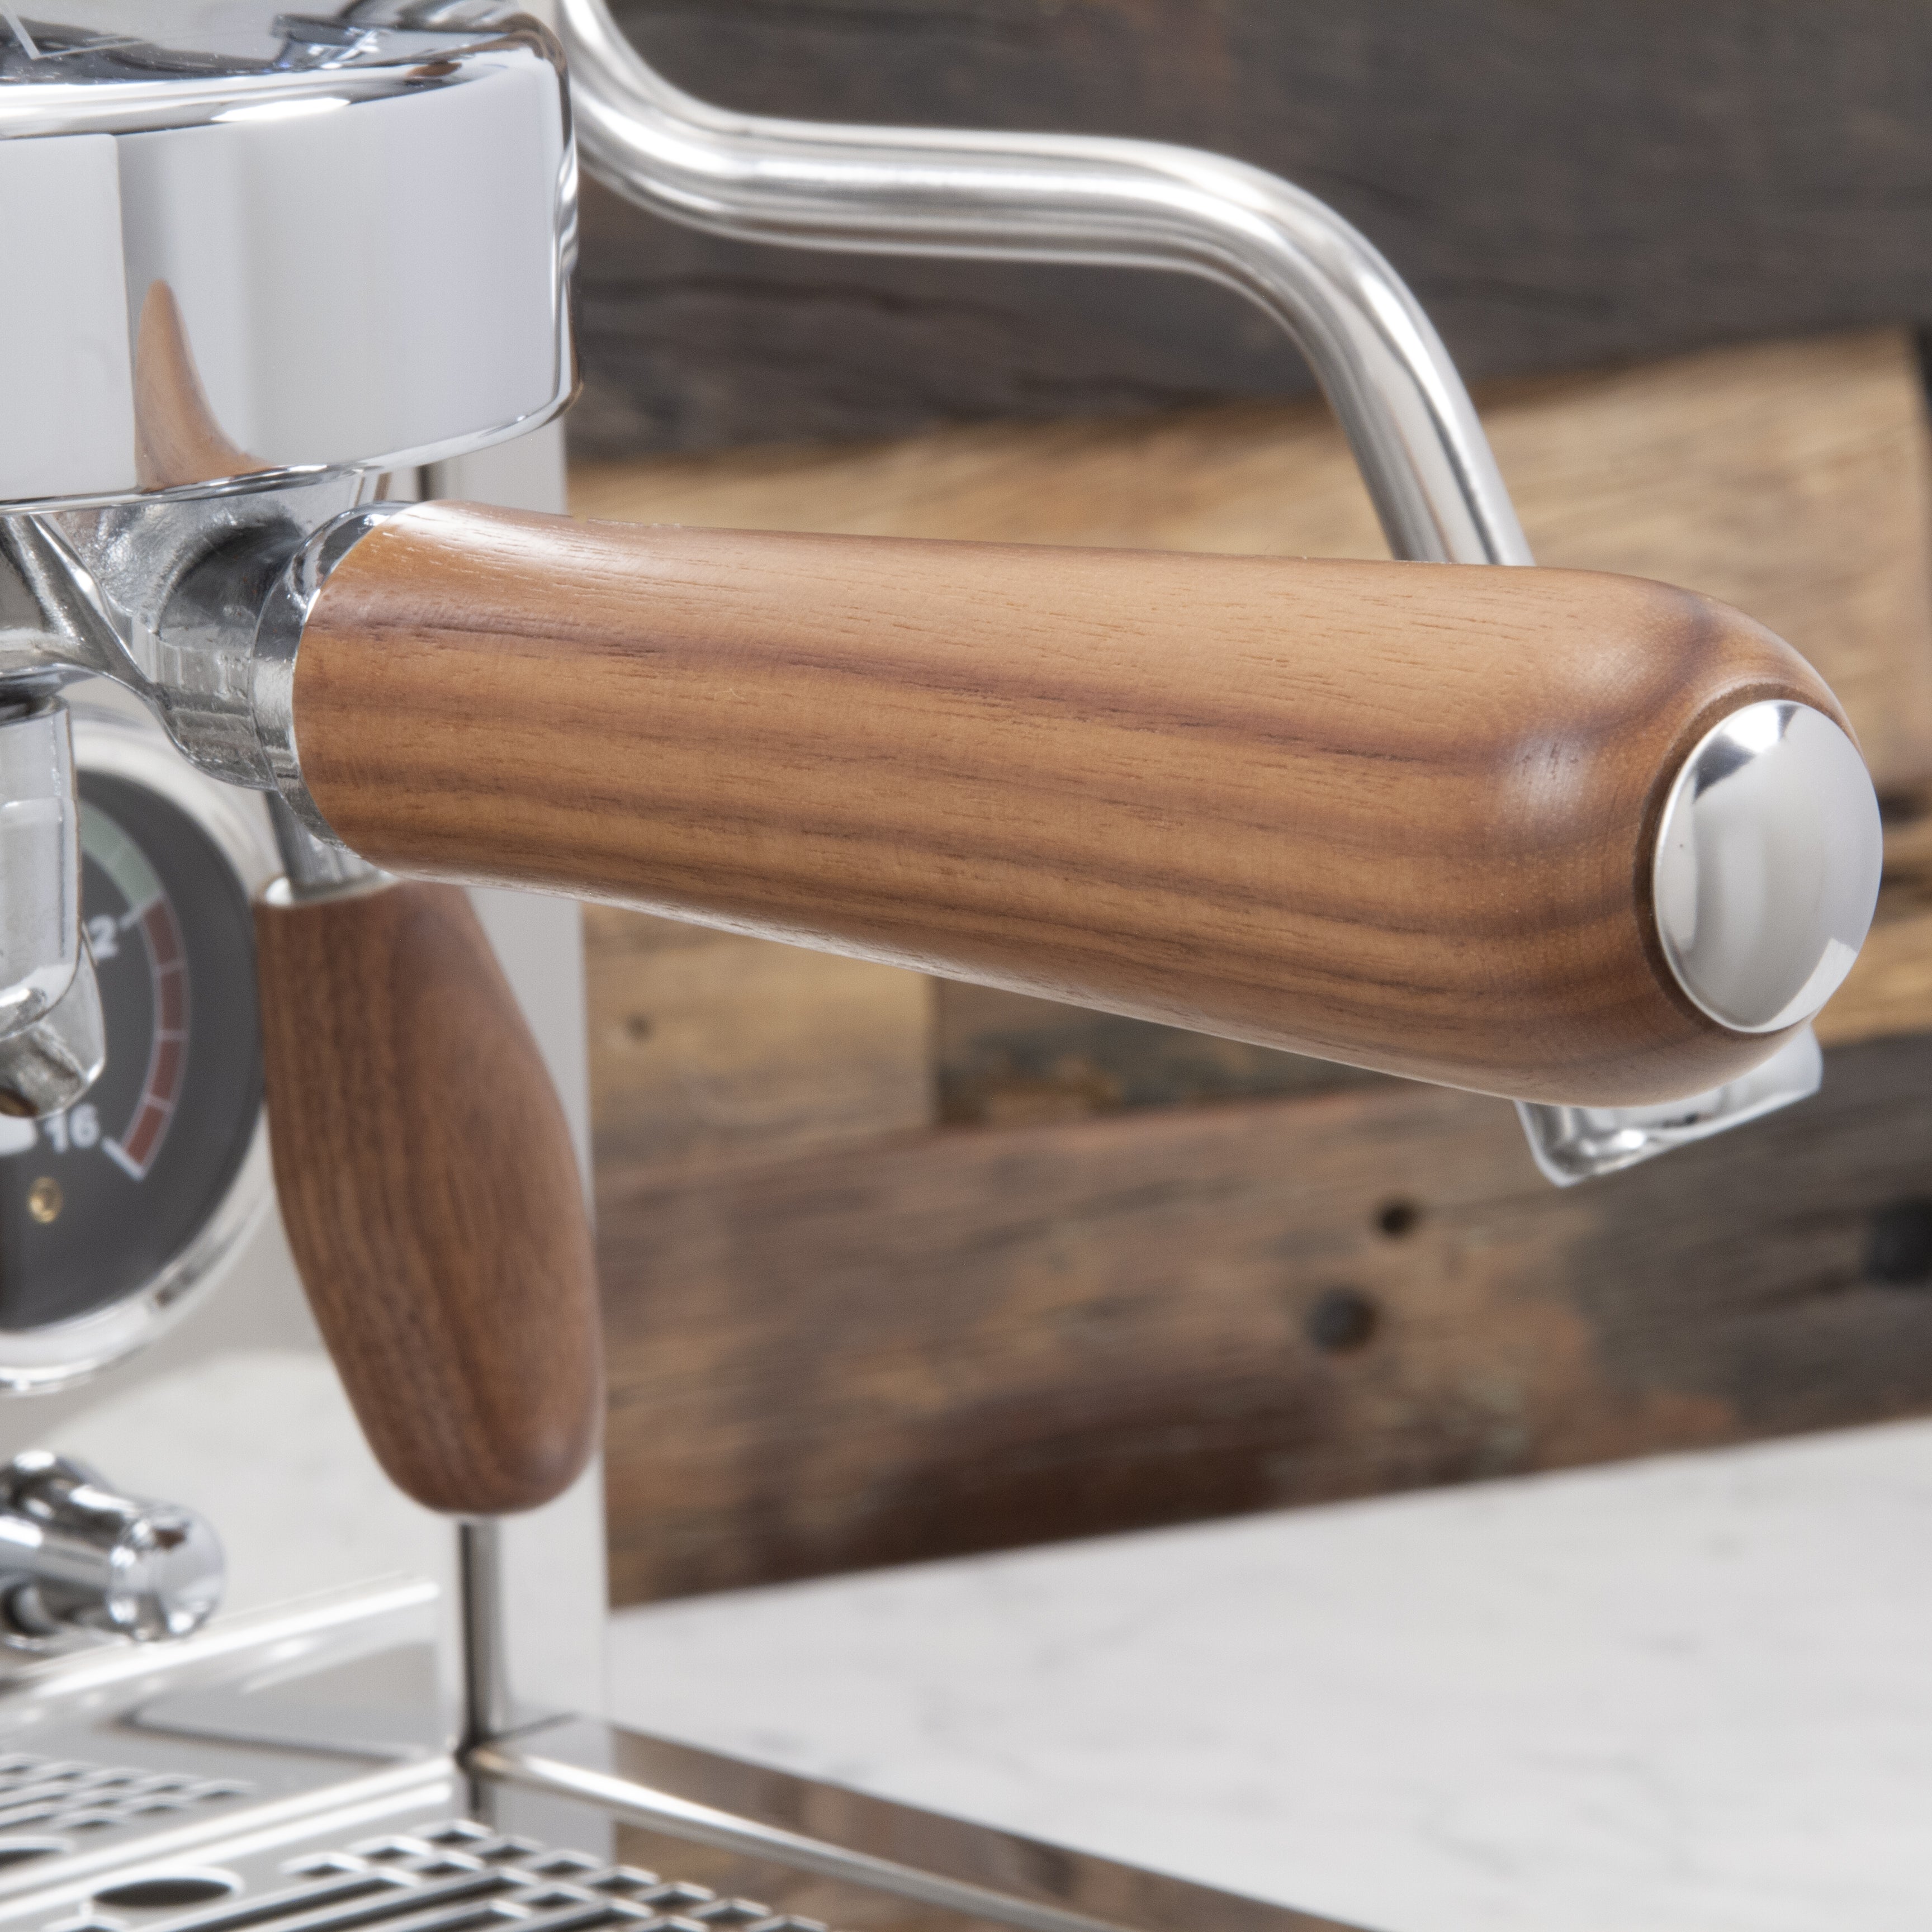 Quick Mill Arnos Espresso Machine With Flow Control - Walnut